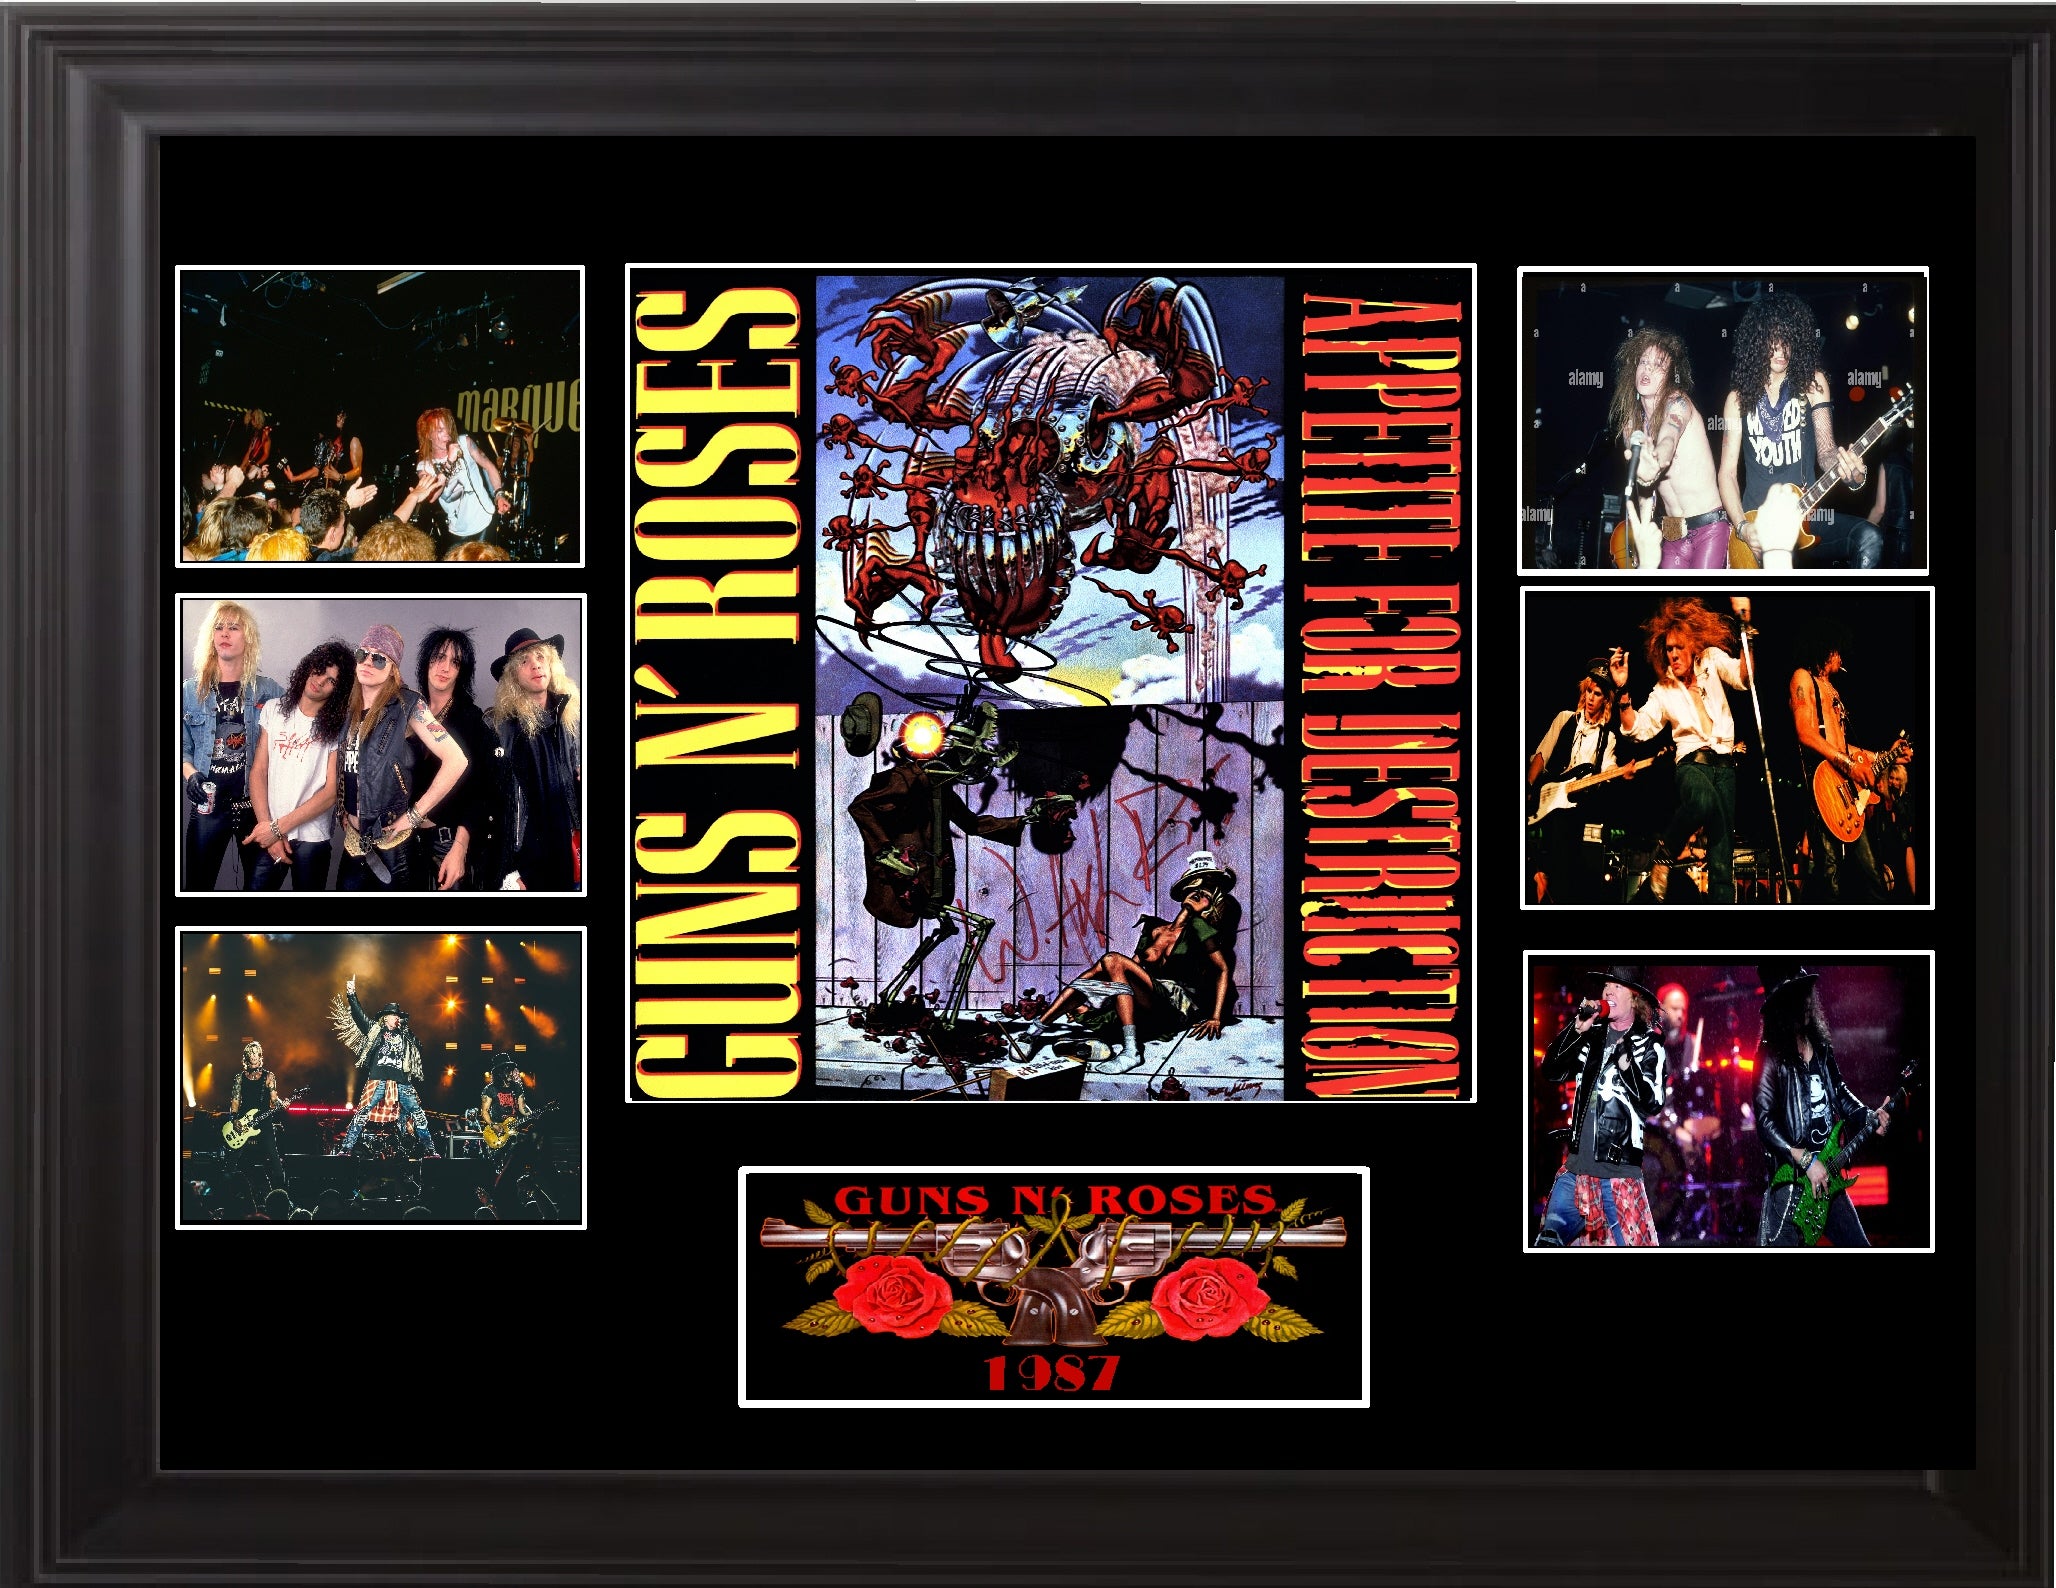 Guns N' Roses Appetite For Destruction Vinilo Nuevo Lp